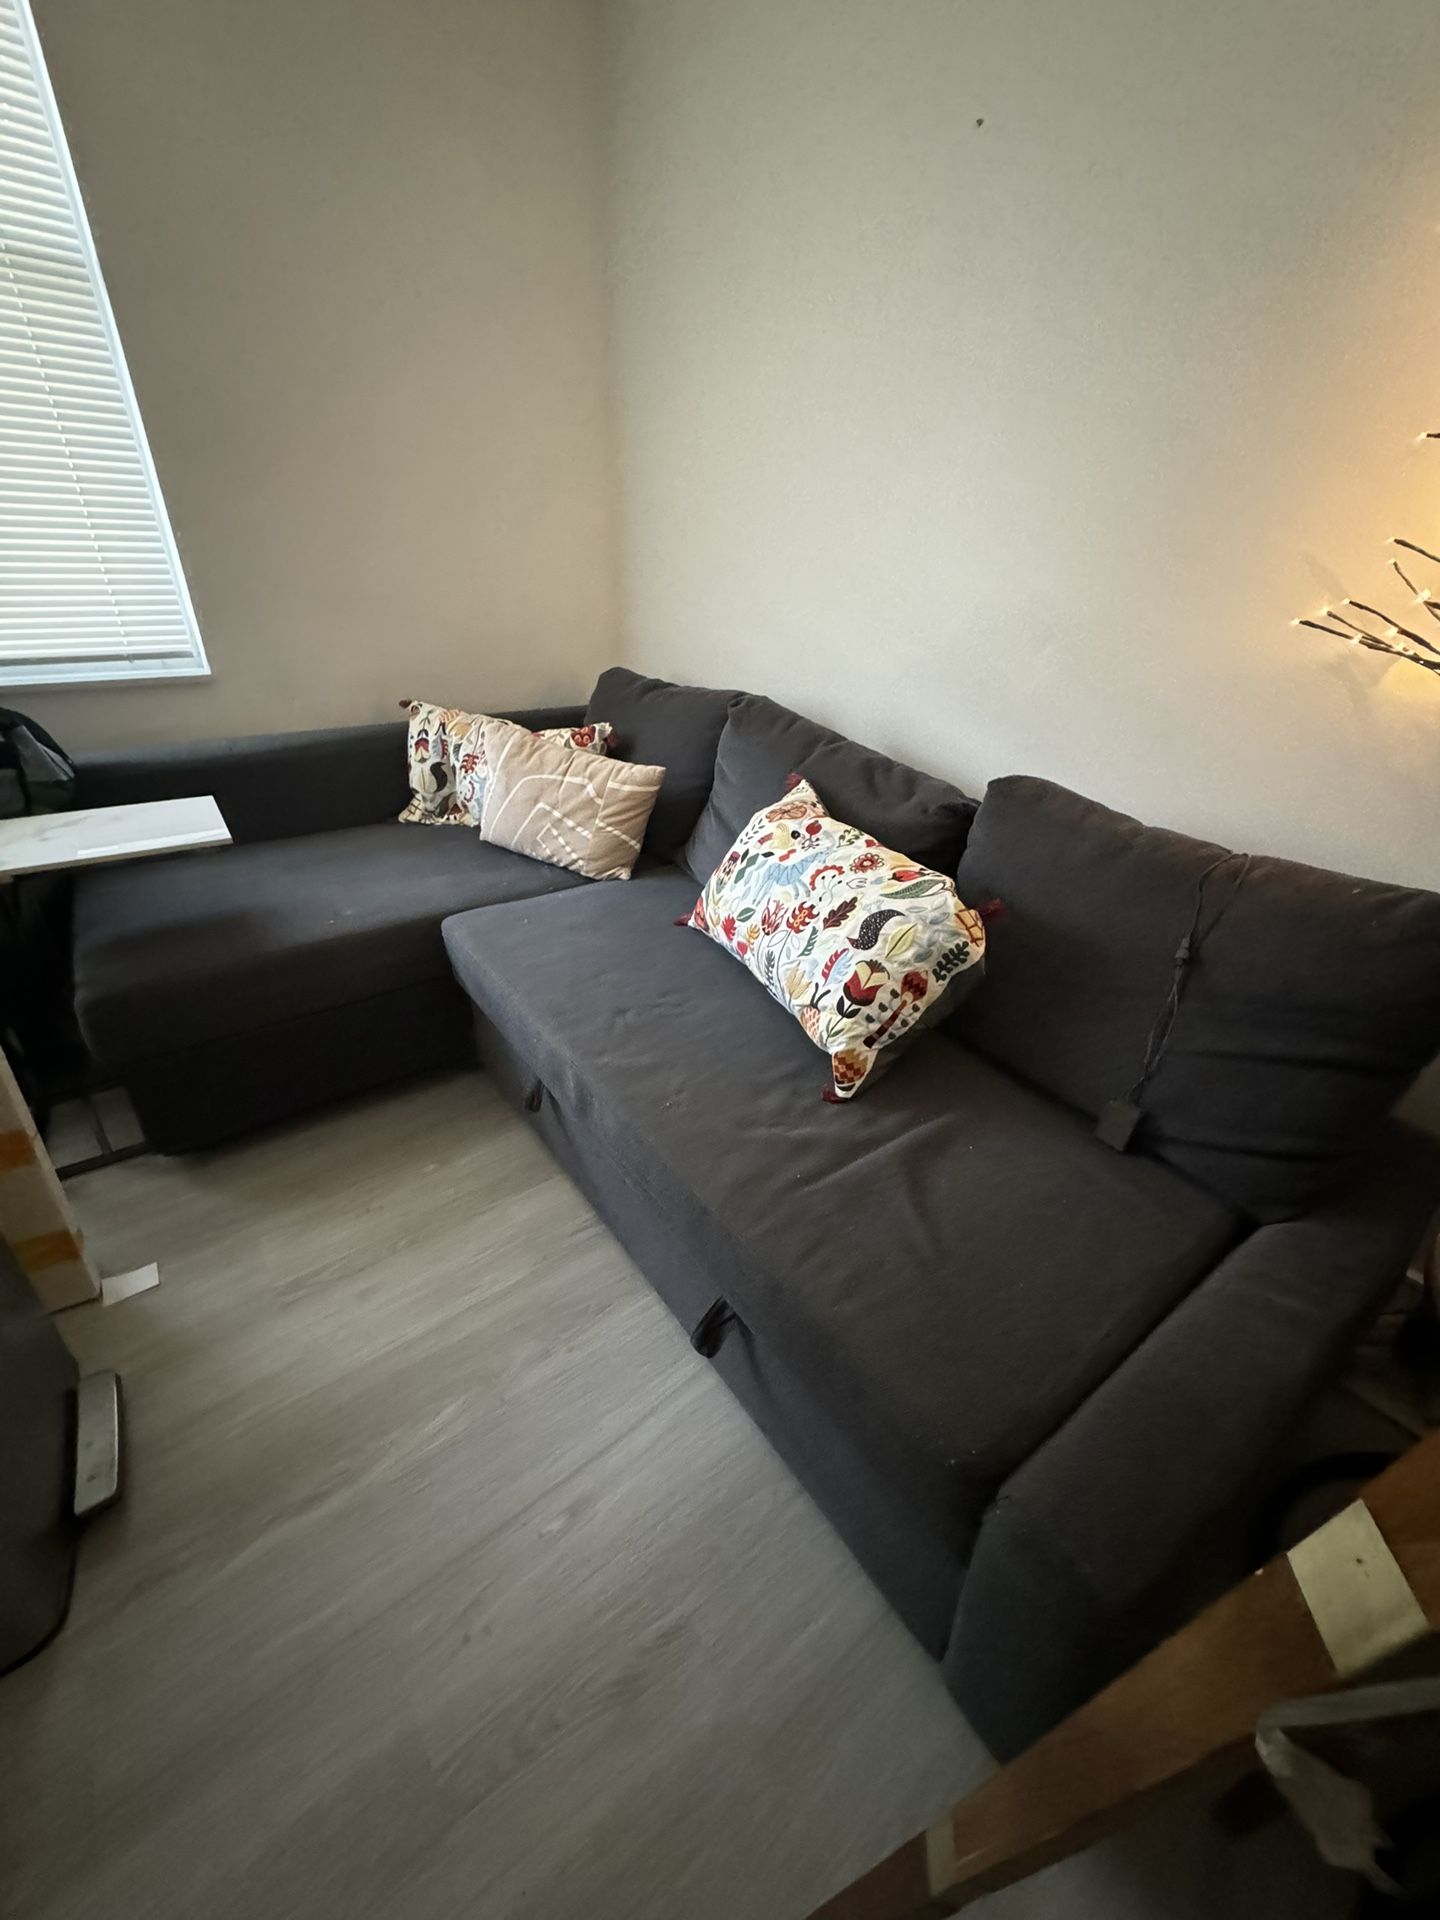 Sofa - Grey 